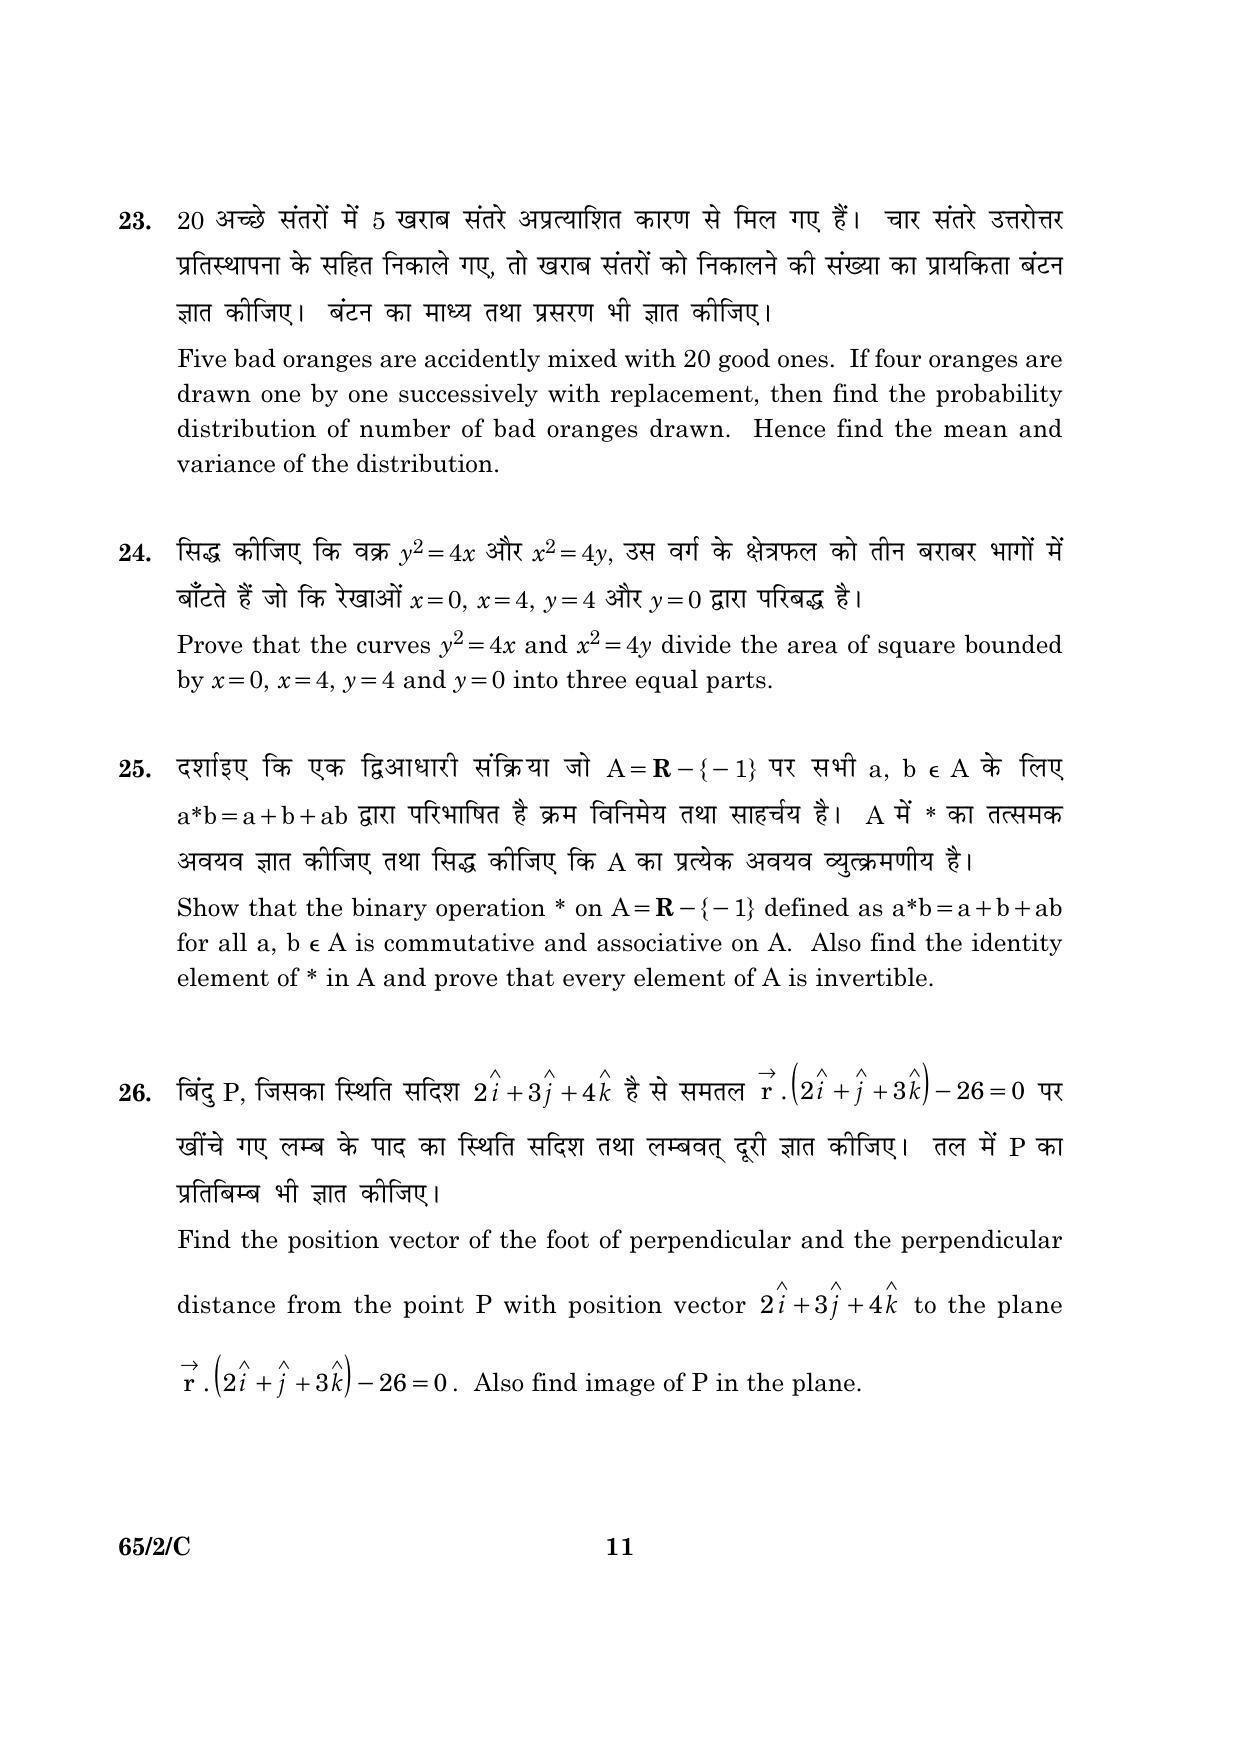 CBSE Class 12 065 Set 2 C Mathematics 2016 Question Paper - Page 11